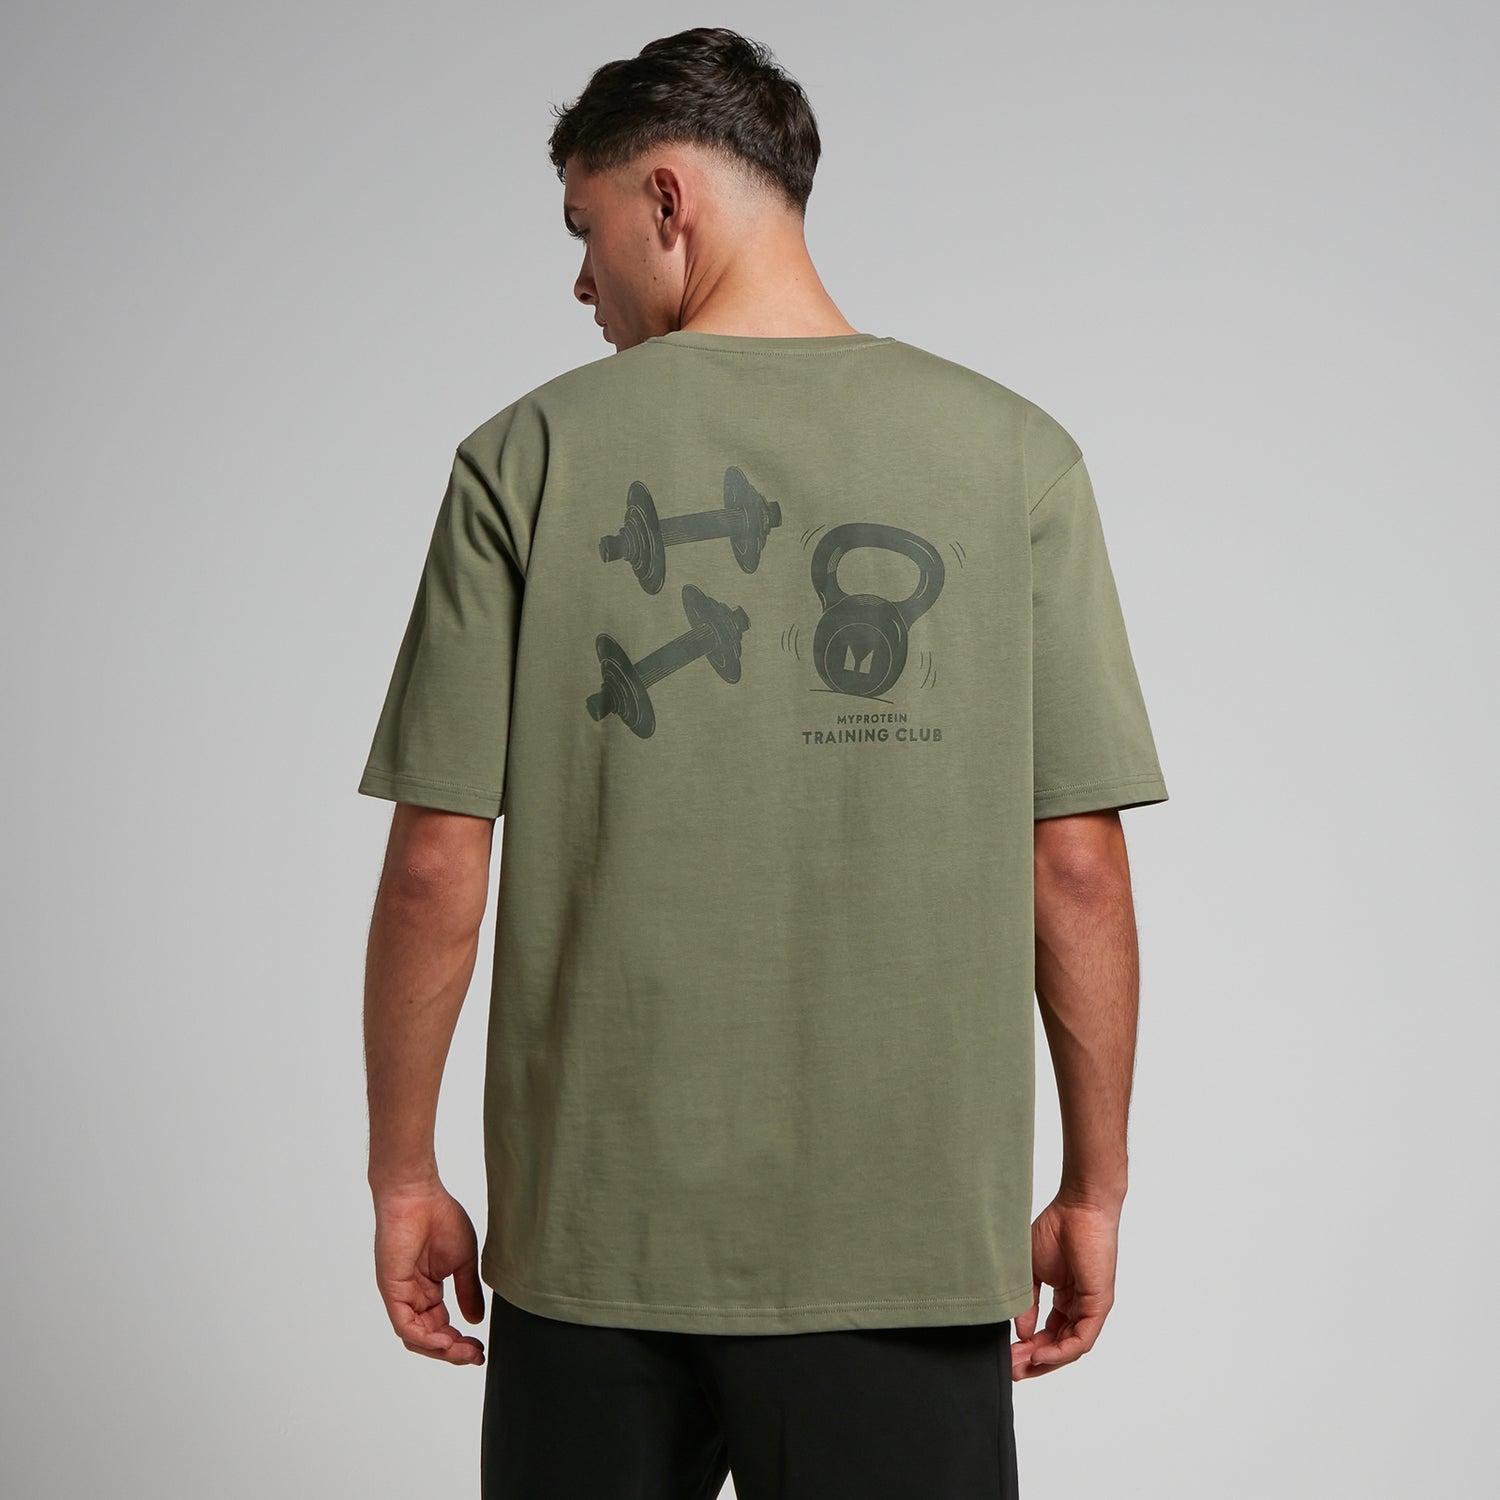 Мужская оверсайз футболка MP Tempo с графическим рисунком — оливковый цвет - XS